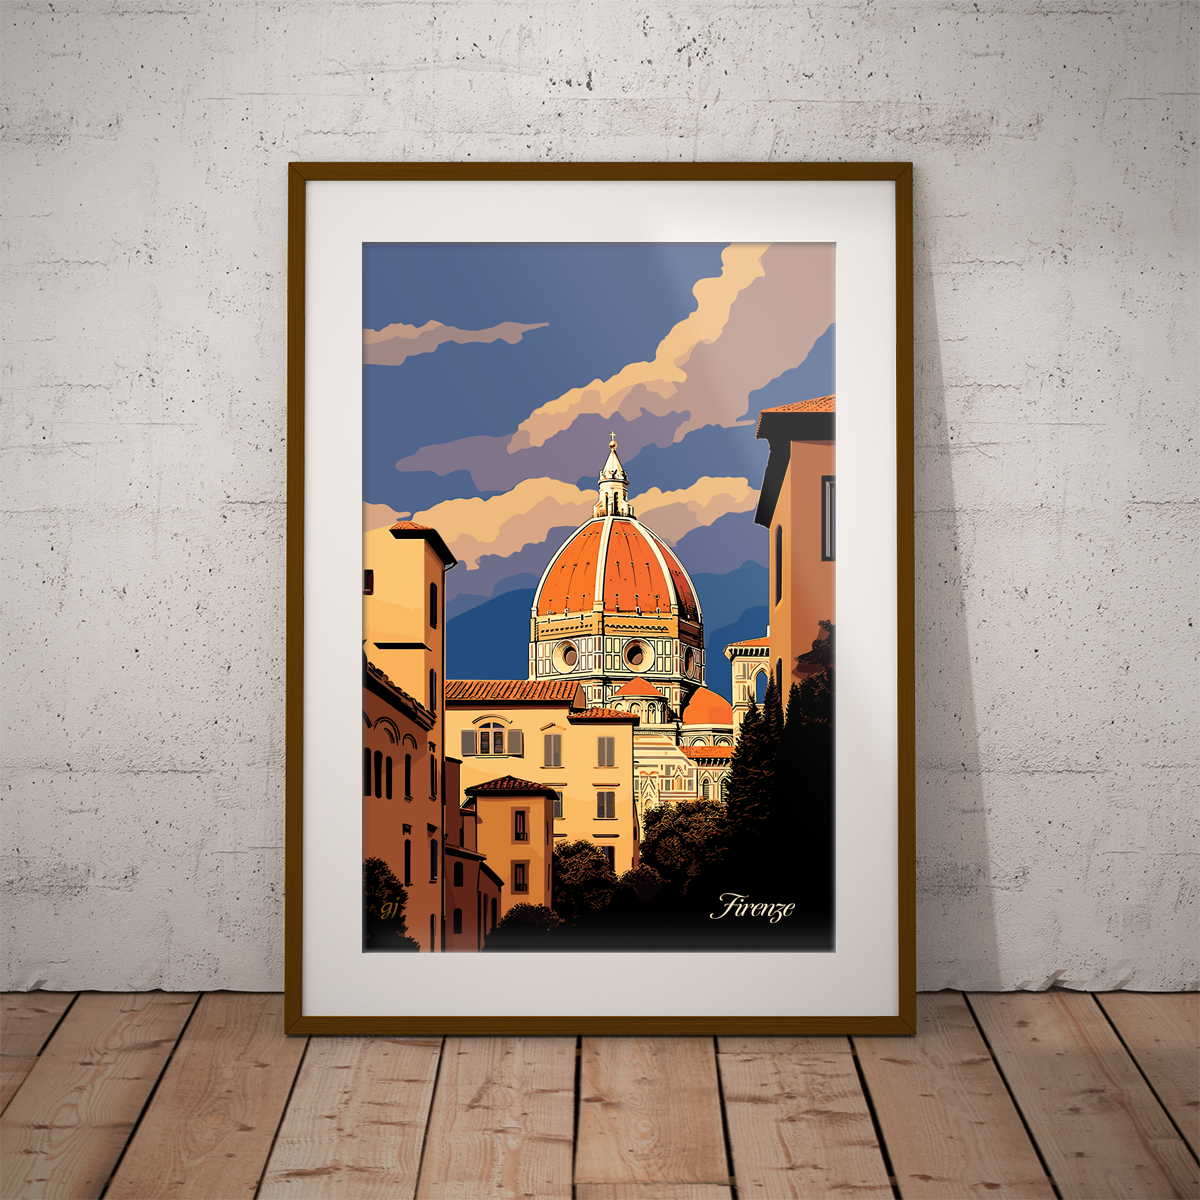 Firenze poster by bon voyage design